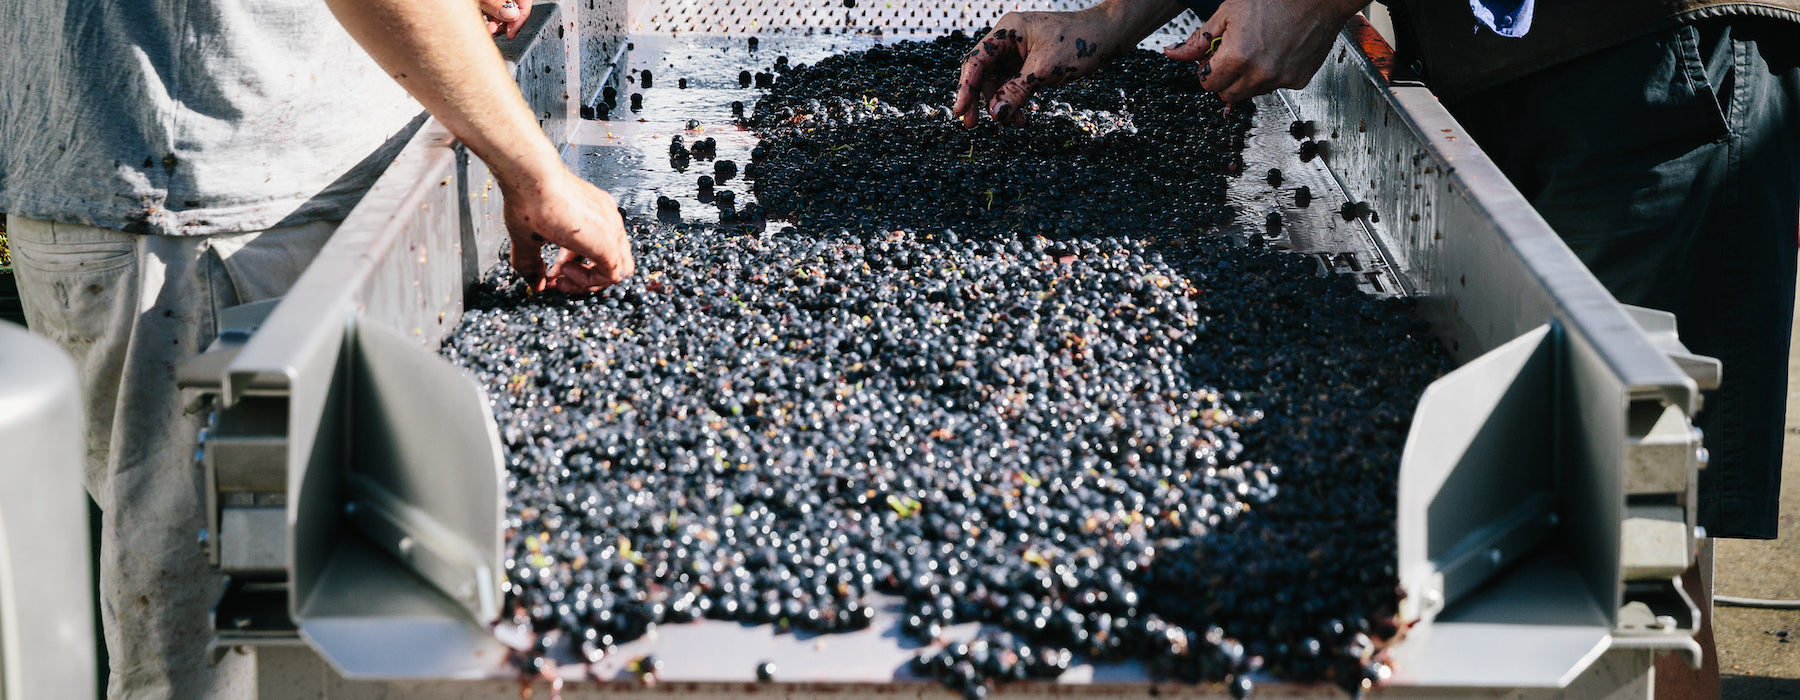 Hands sorting wine grapes